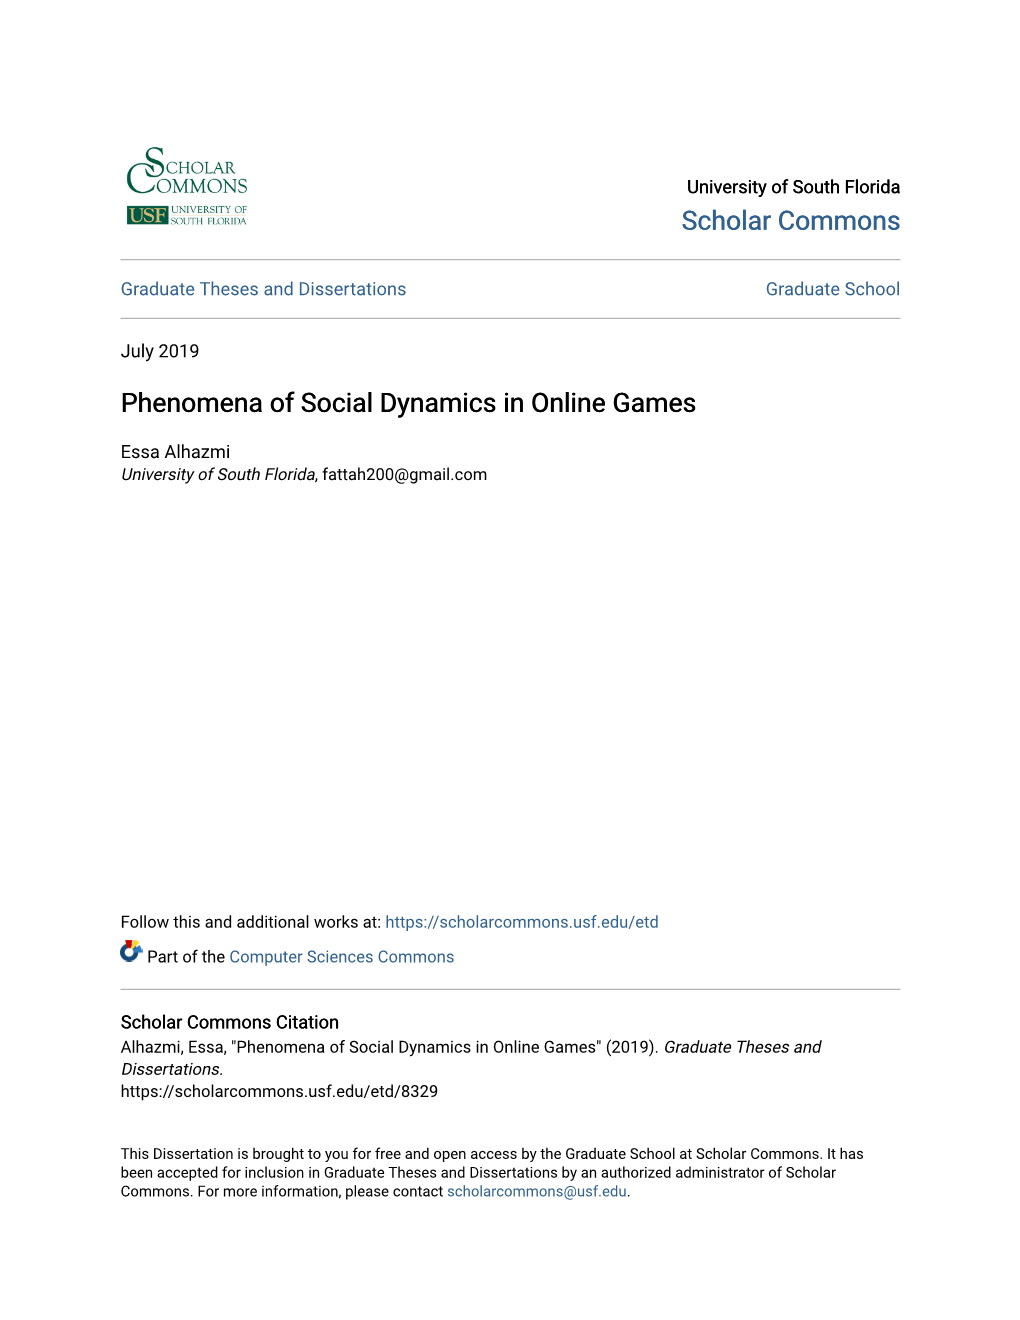 Phenomena of Social Dynamics in Online Games